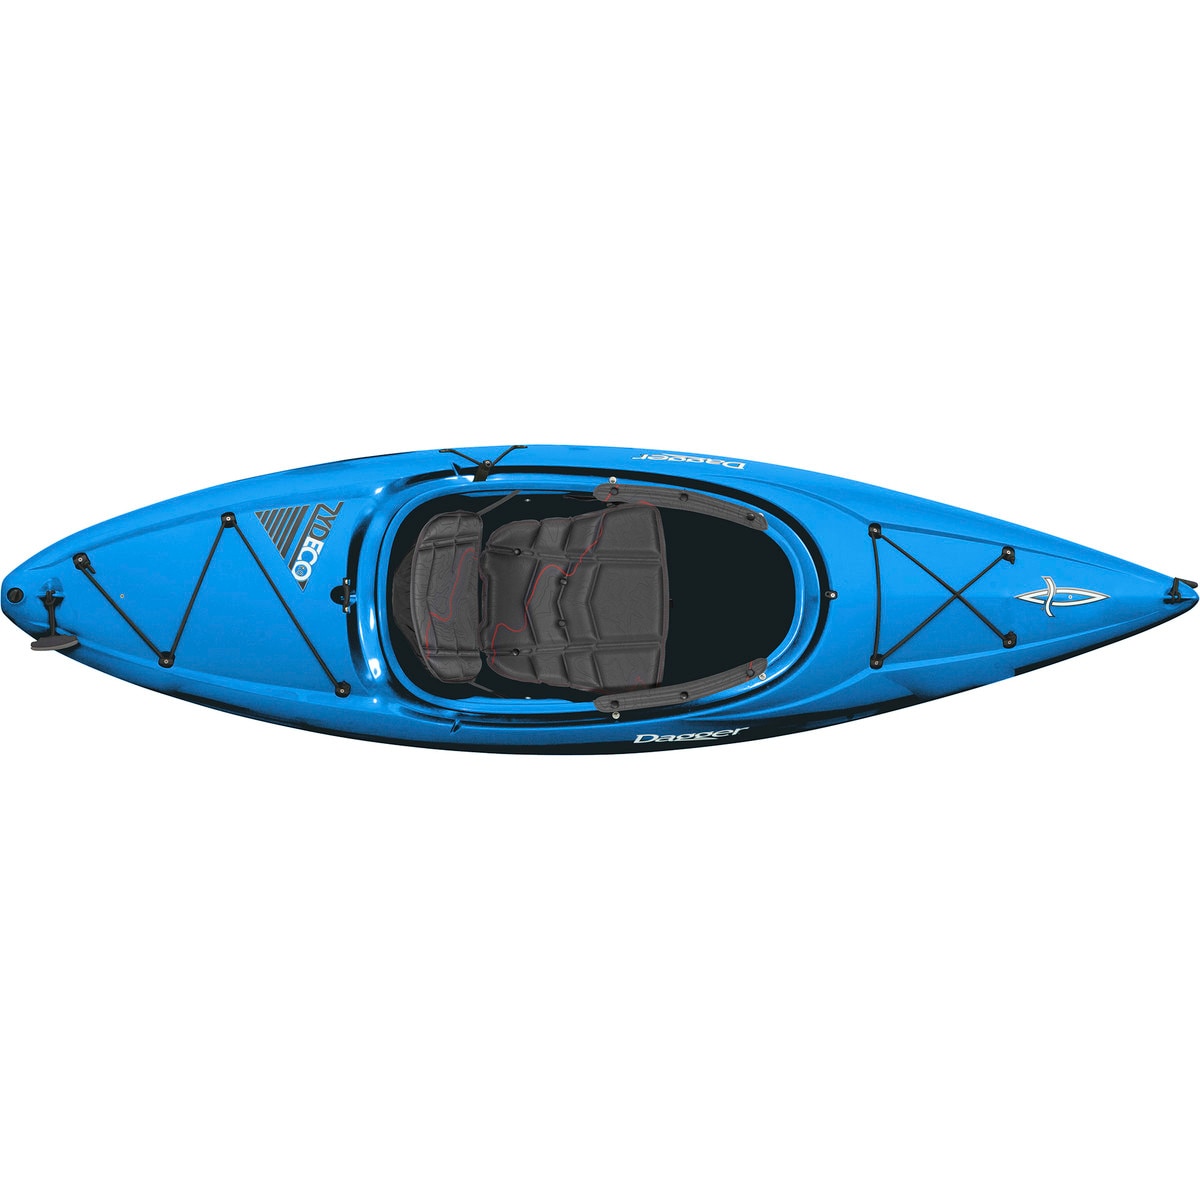 Color:Blue:Dagger Zydeco 9.0 Kayak